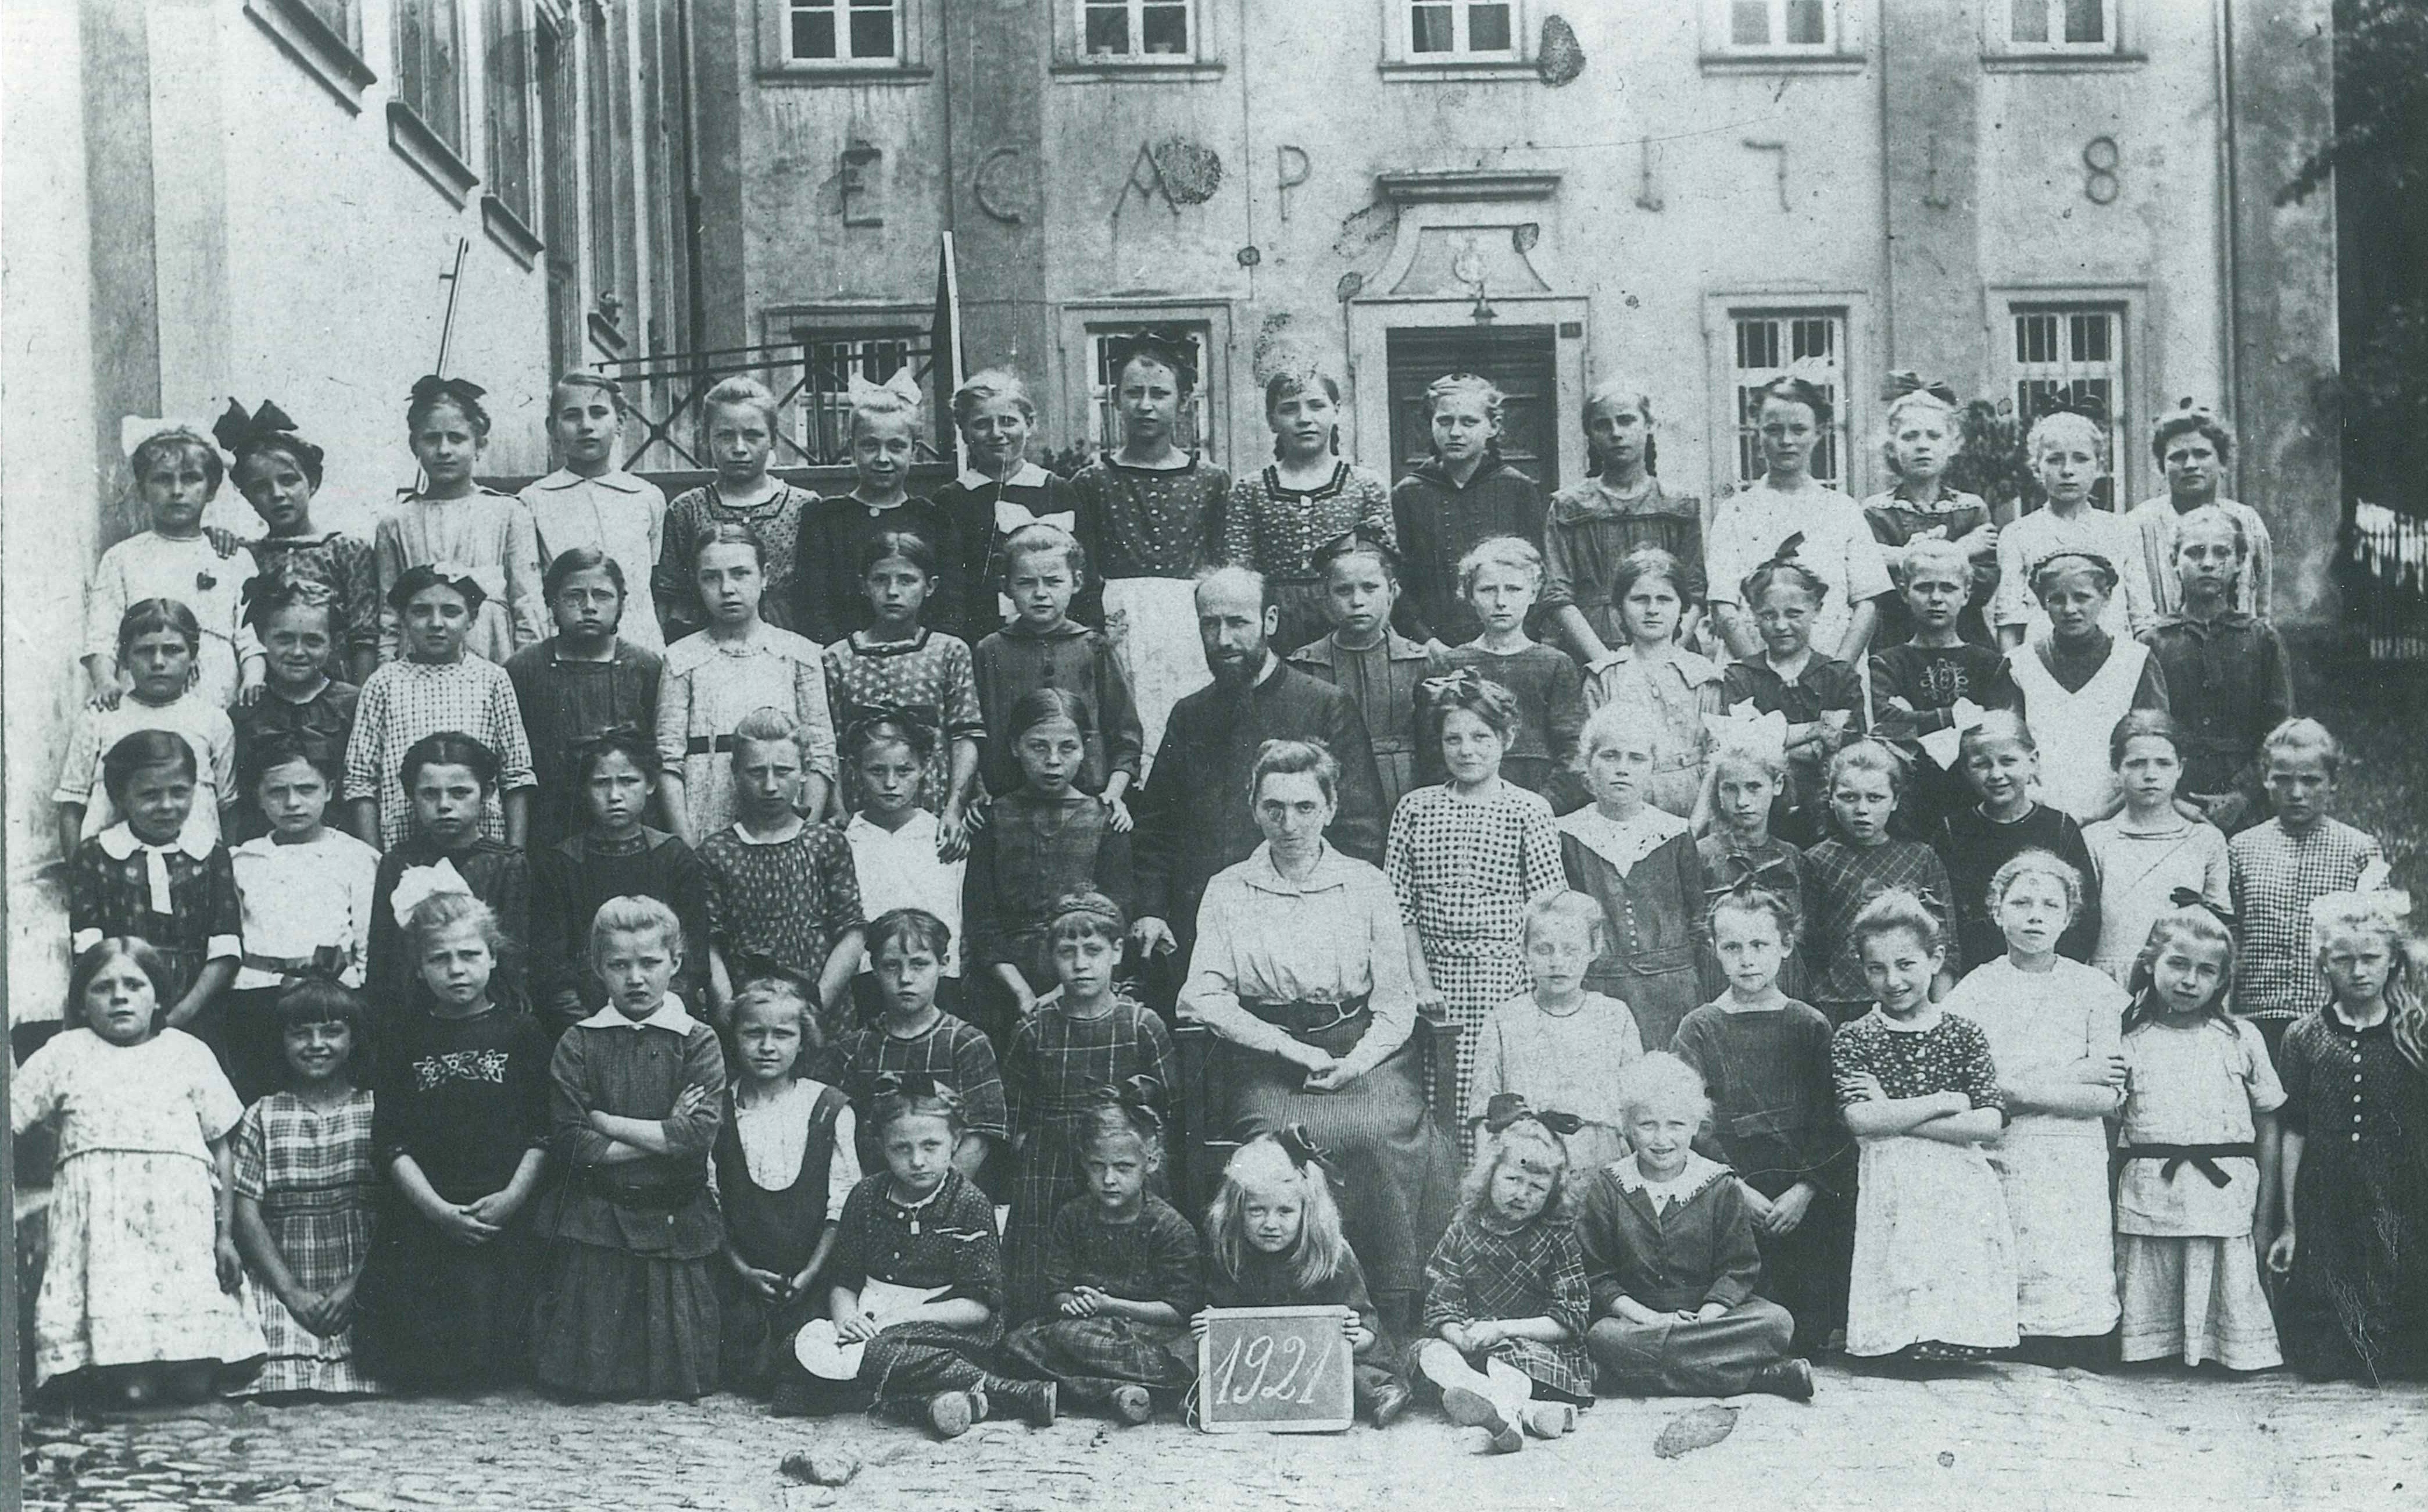 Klassenfoto, ehemalige katholische Schule im Abteigebäude, Sayn, 1921 (REM CC BY-NC-SA)